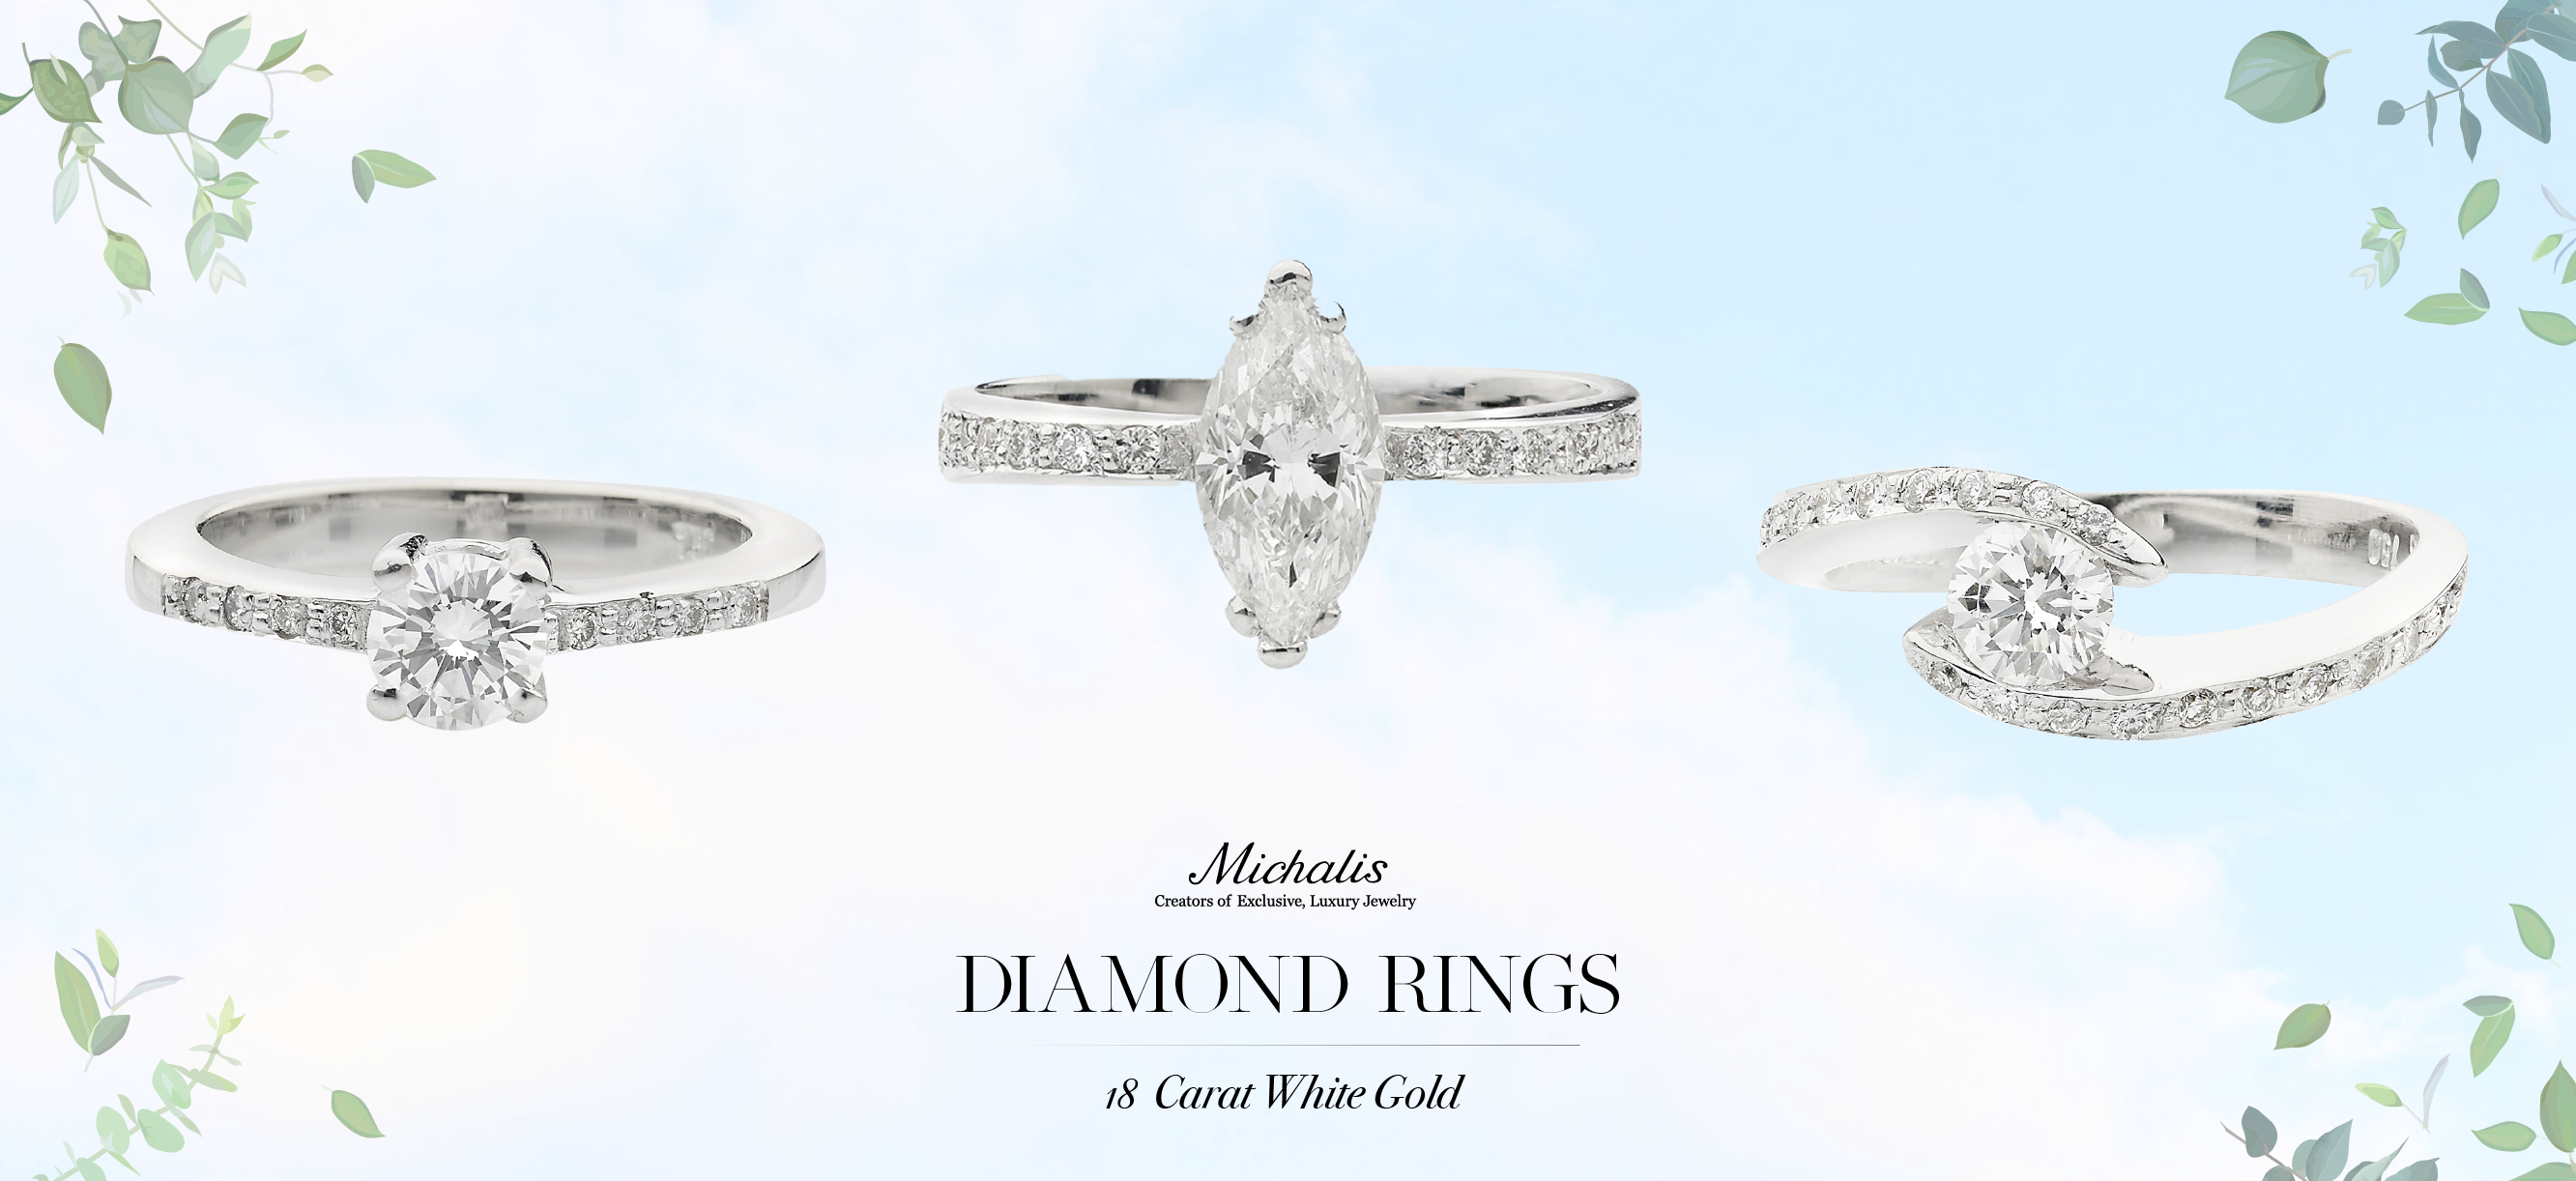 DIAMOND RINGS - MICHALIS